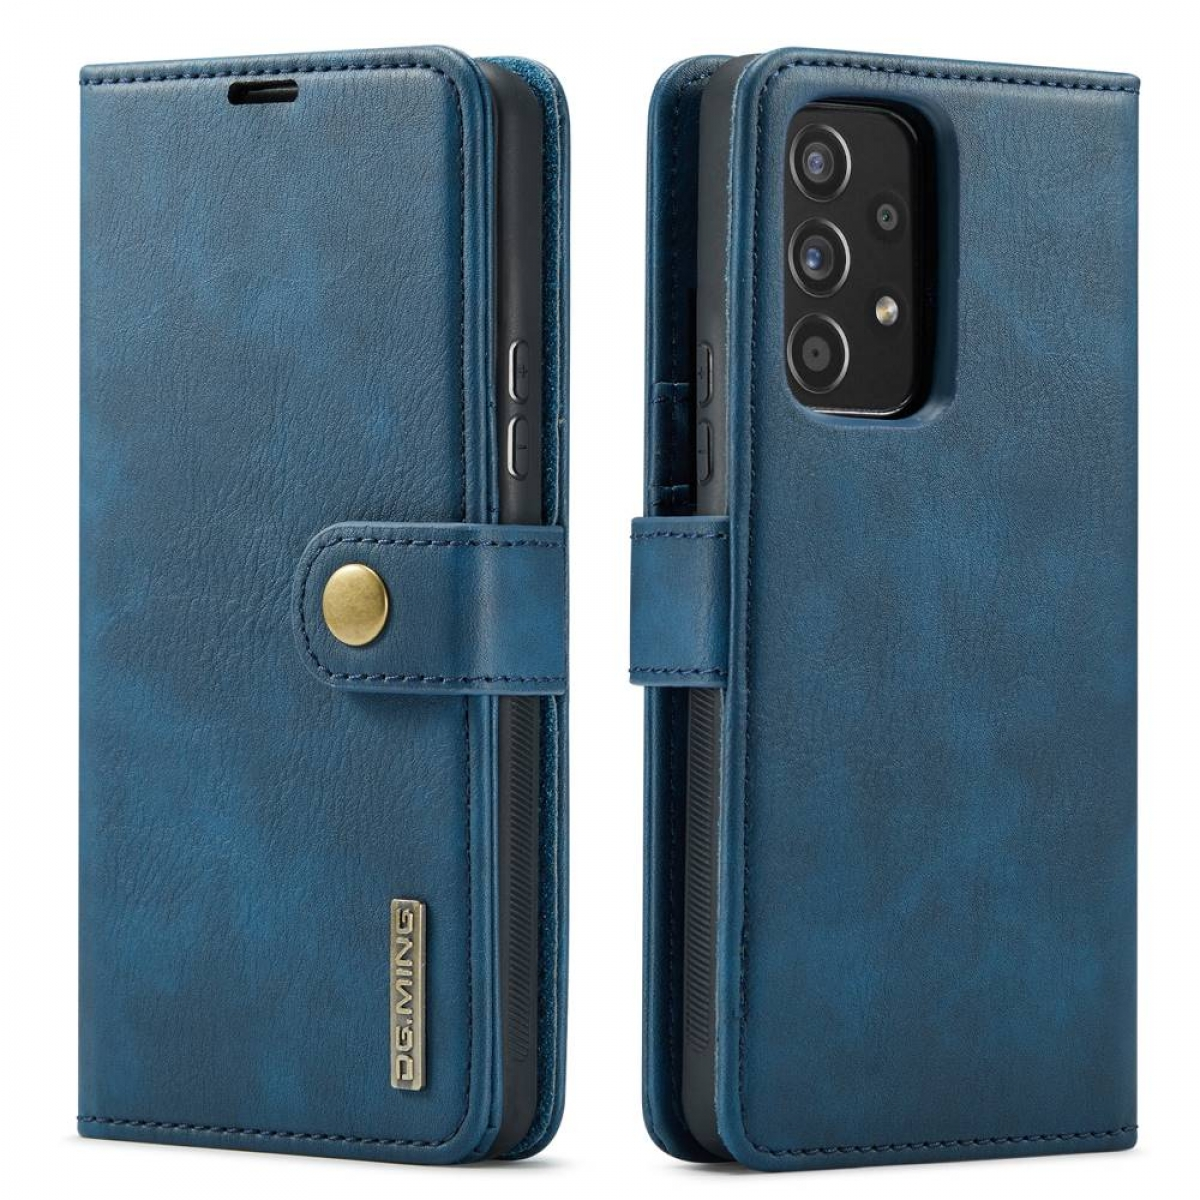 DG MING Blau Galaxy A53 5G, Samsung, 2in1, Bookcover